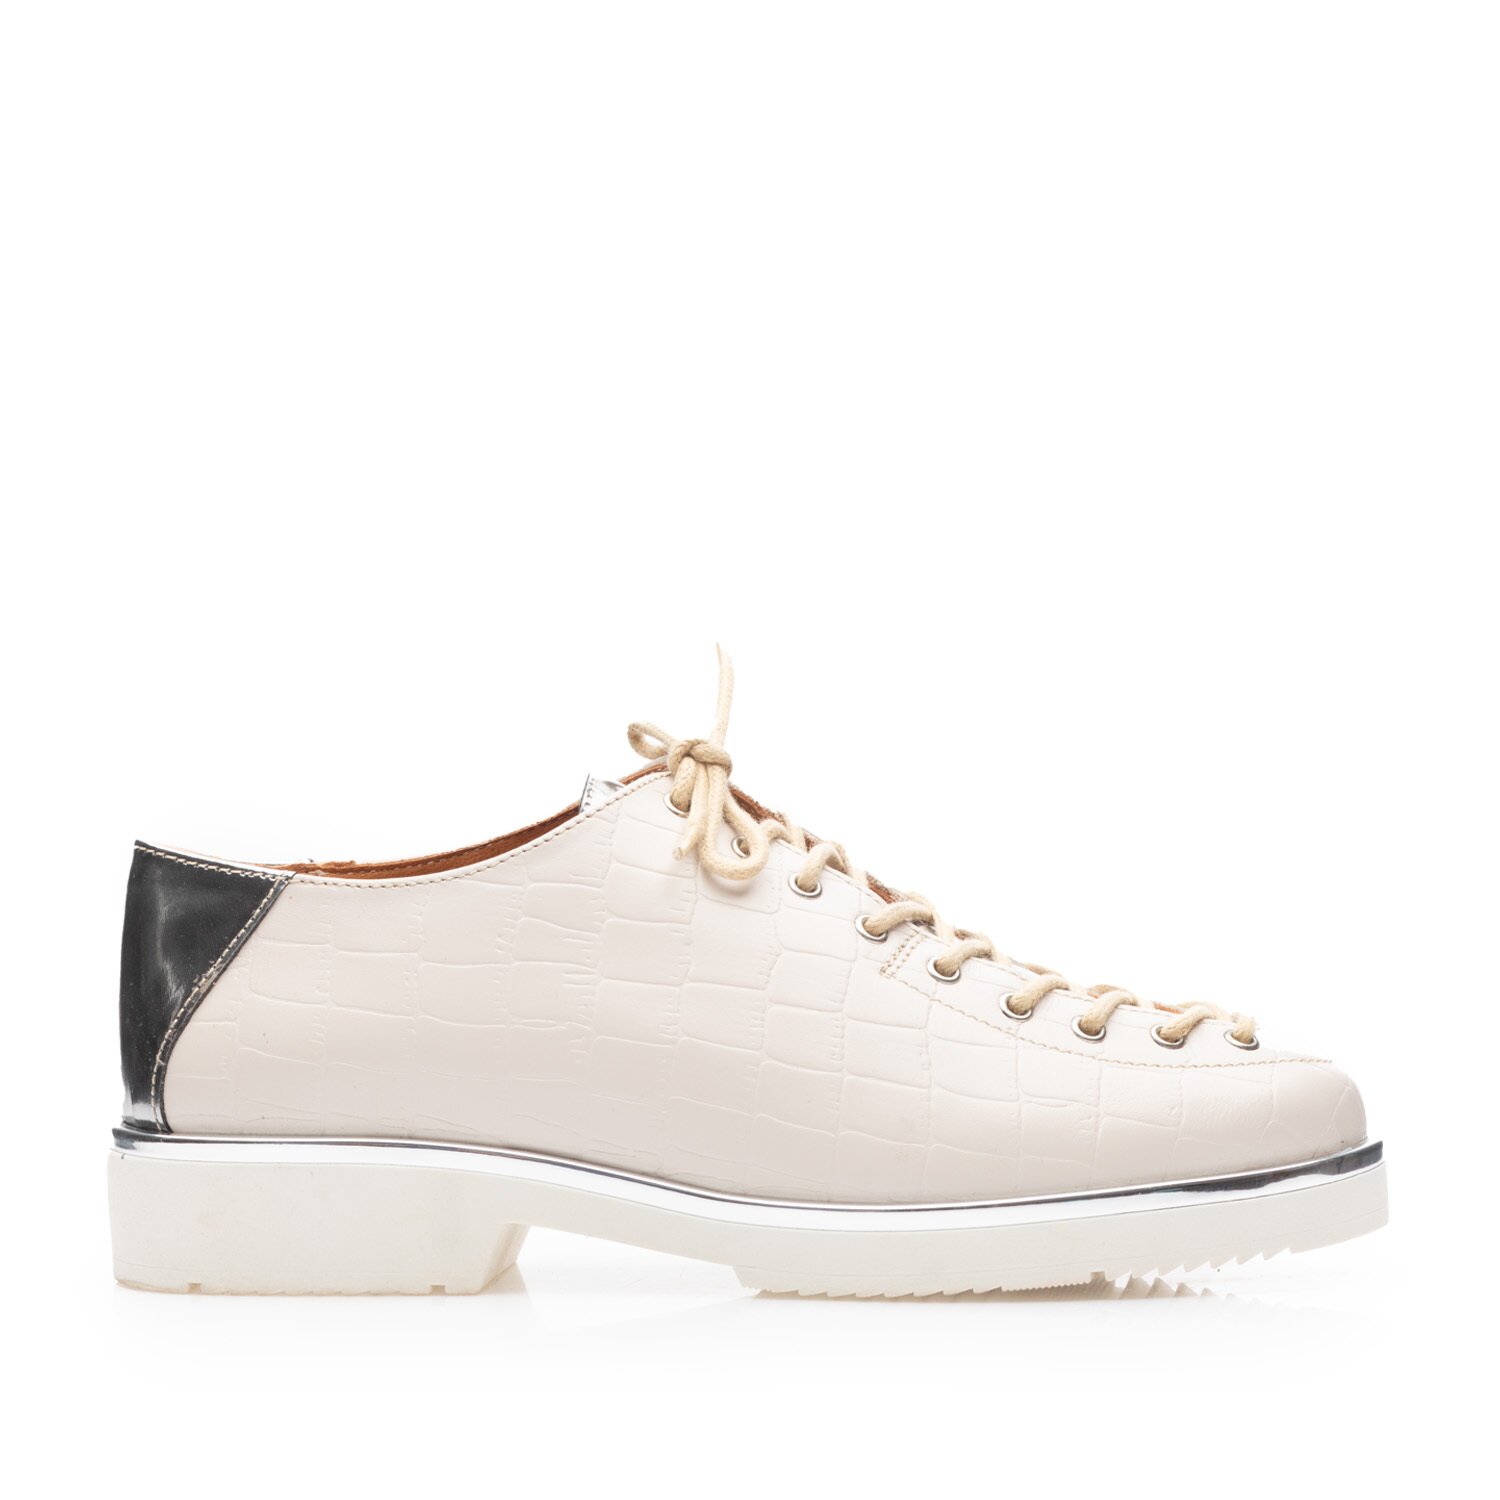 Pantofi casual dama cu siret pana in varf din piele naturala, Leofex- 194-1 Alb Argintiu Box